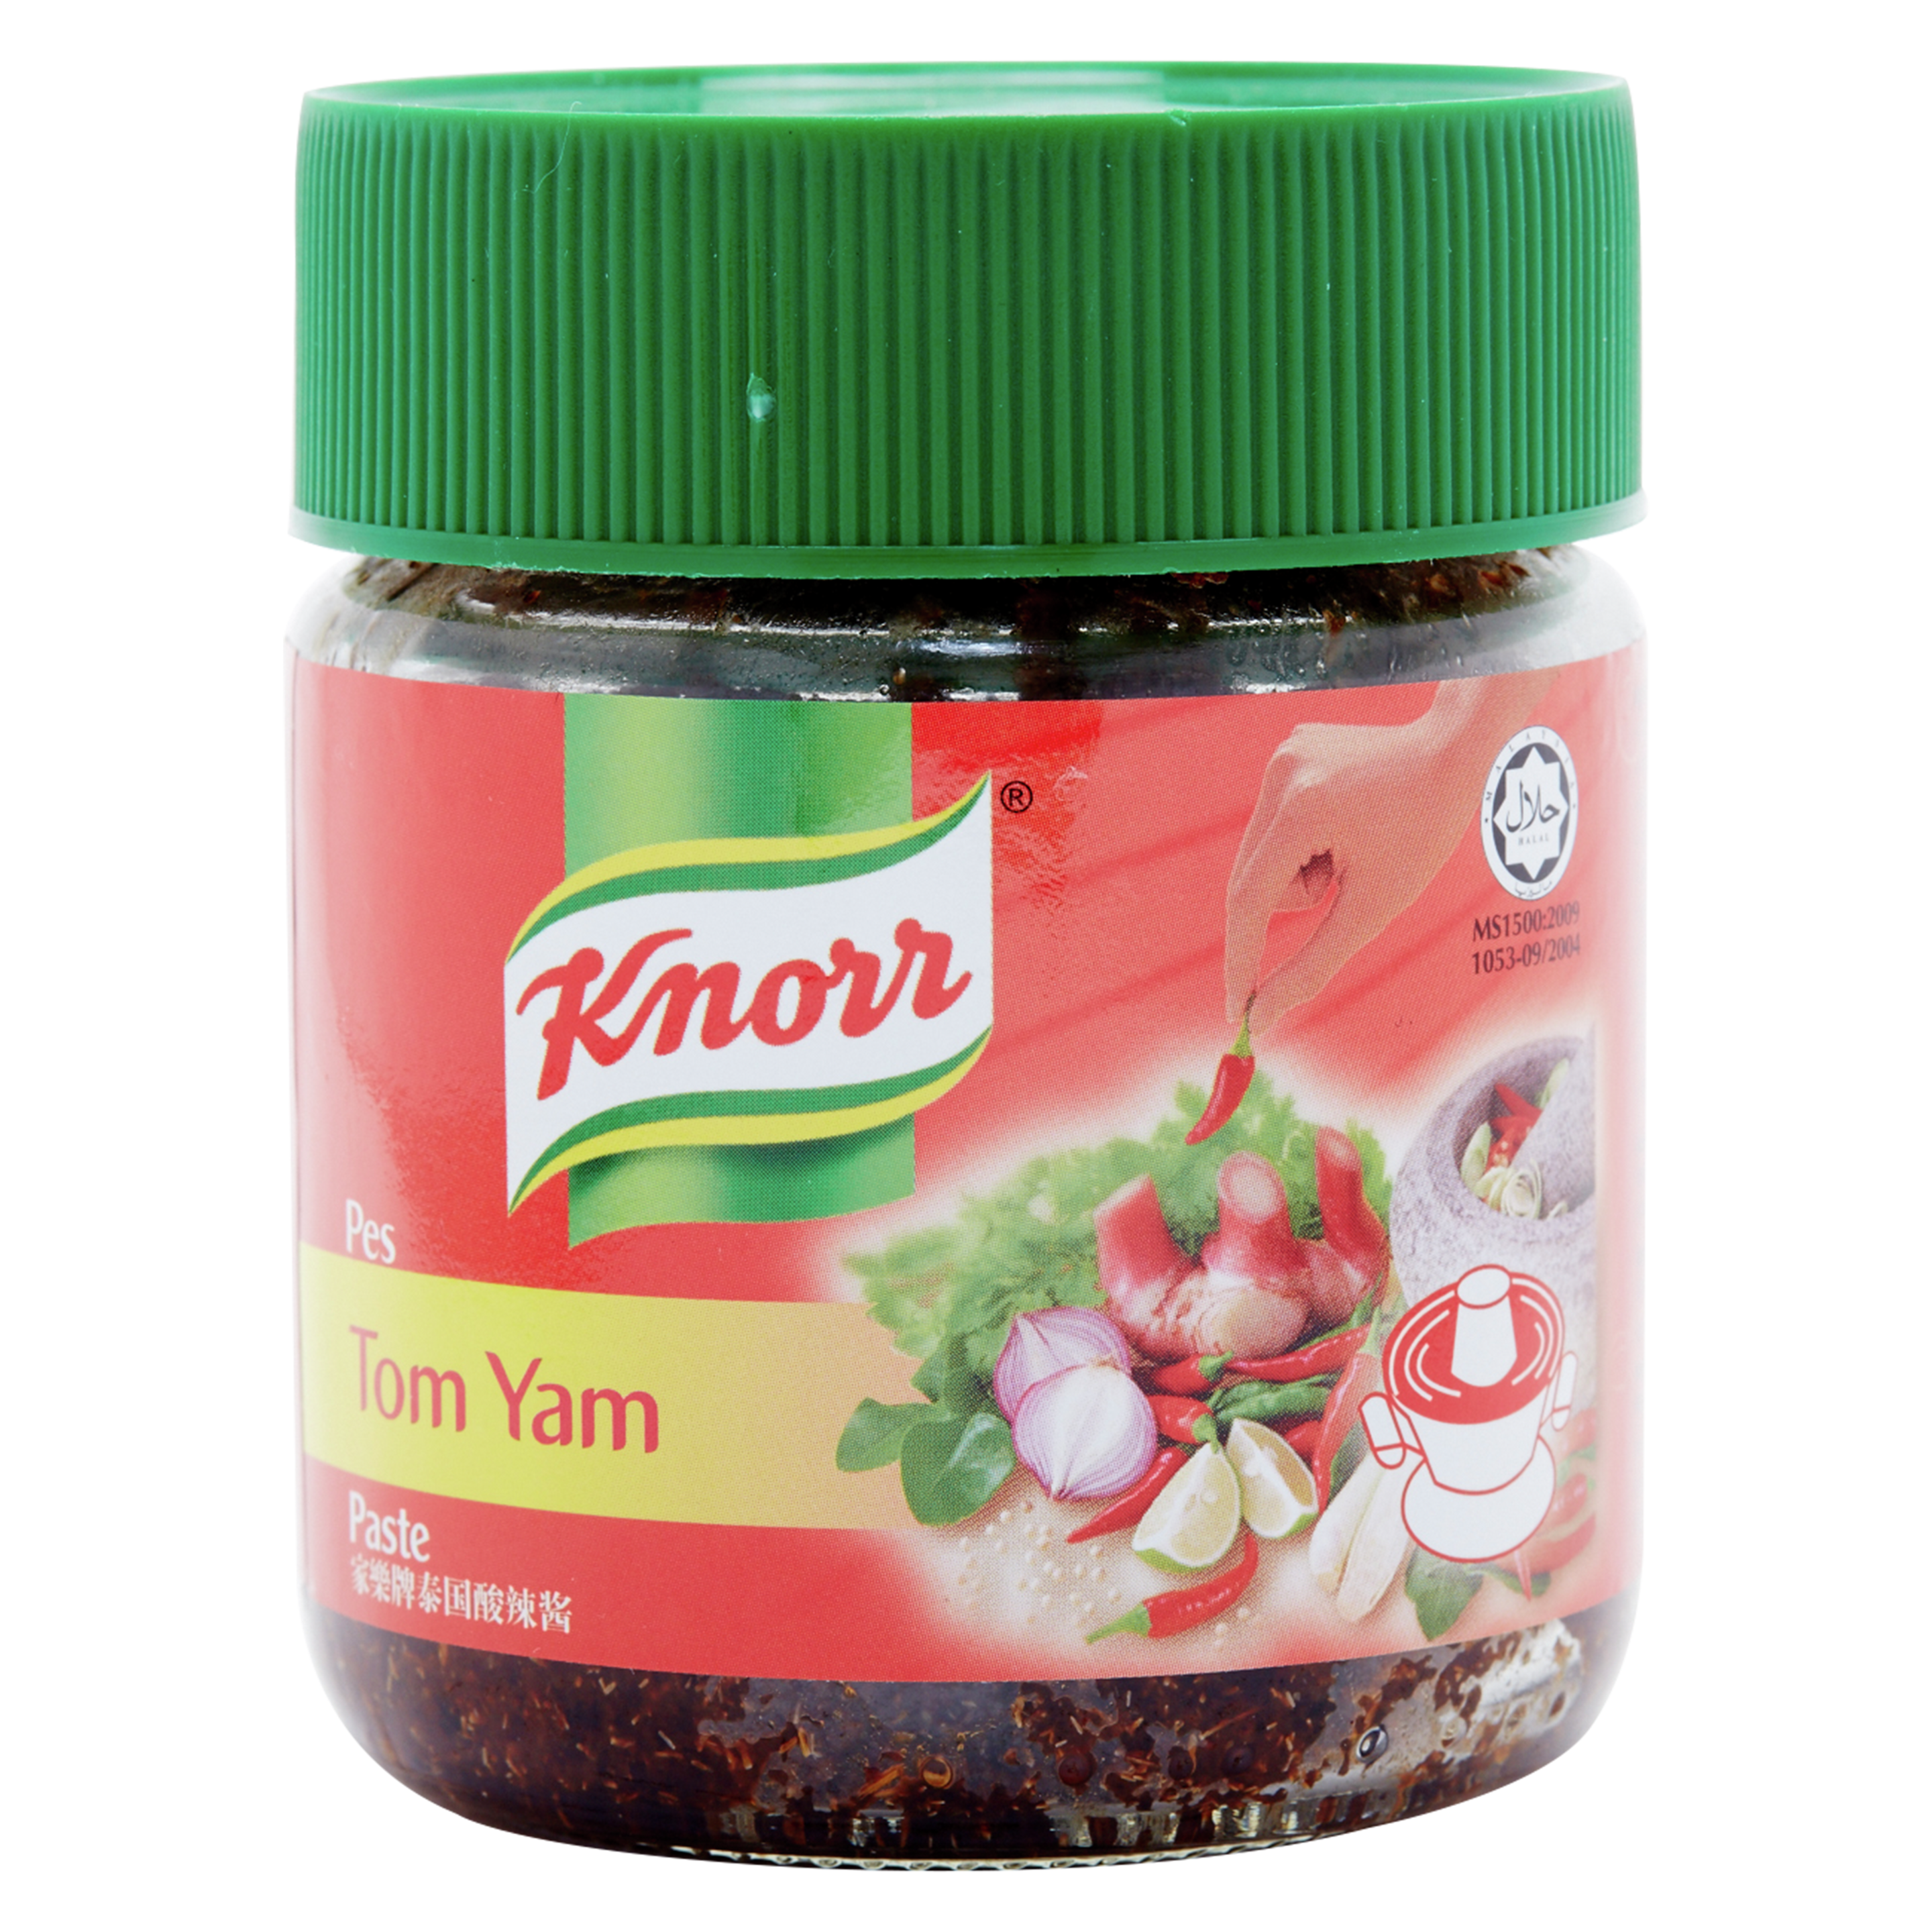 Knorr Tom Yam Paste